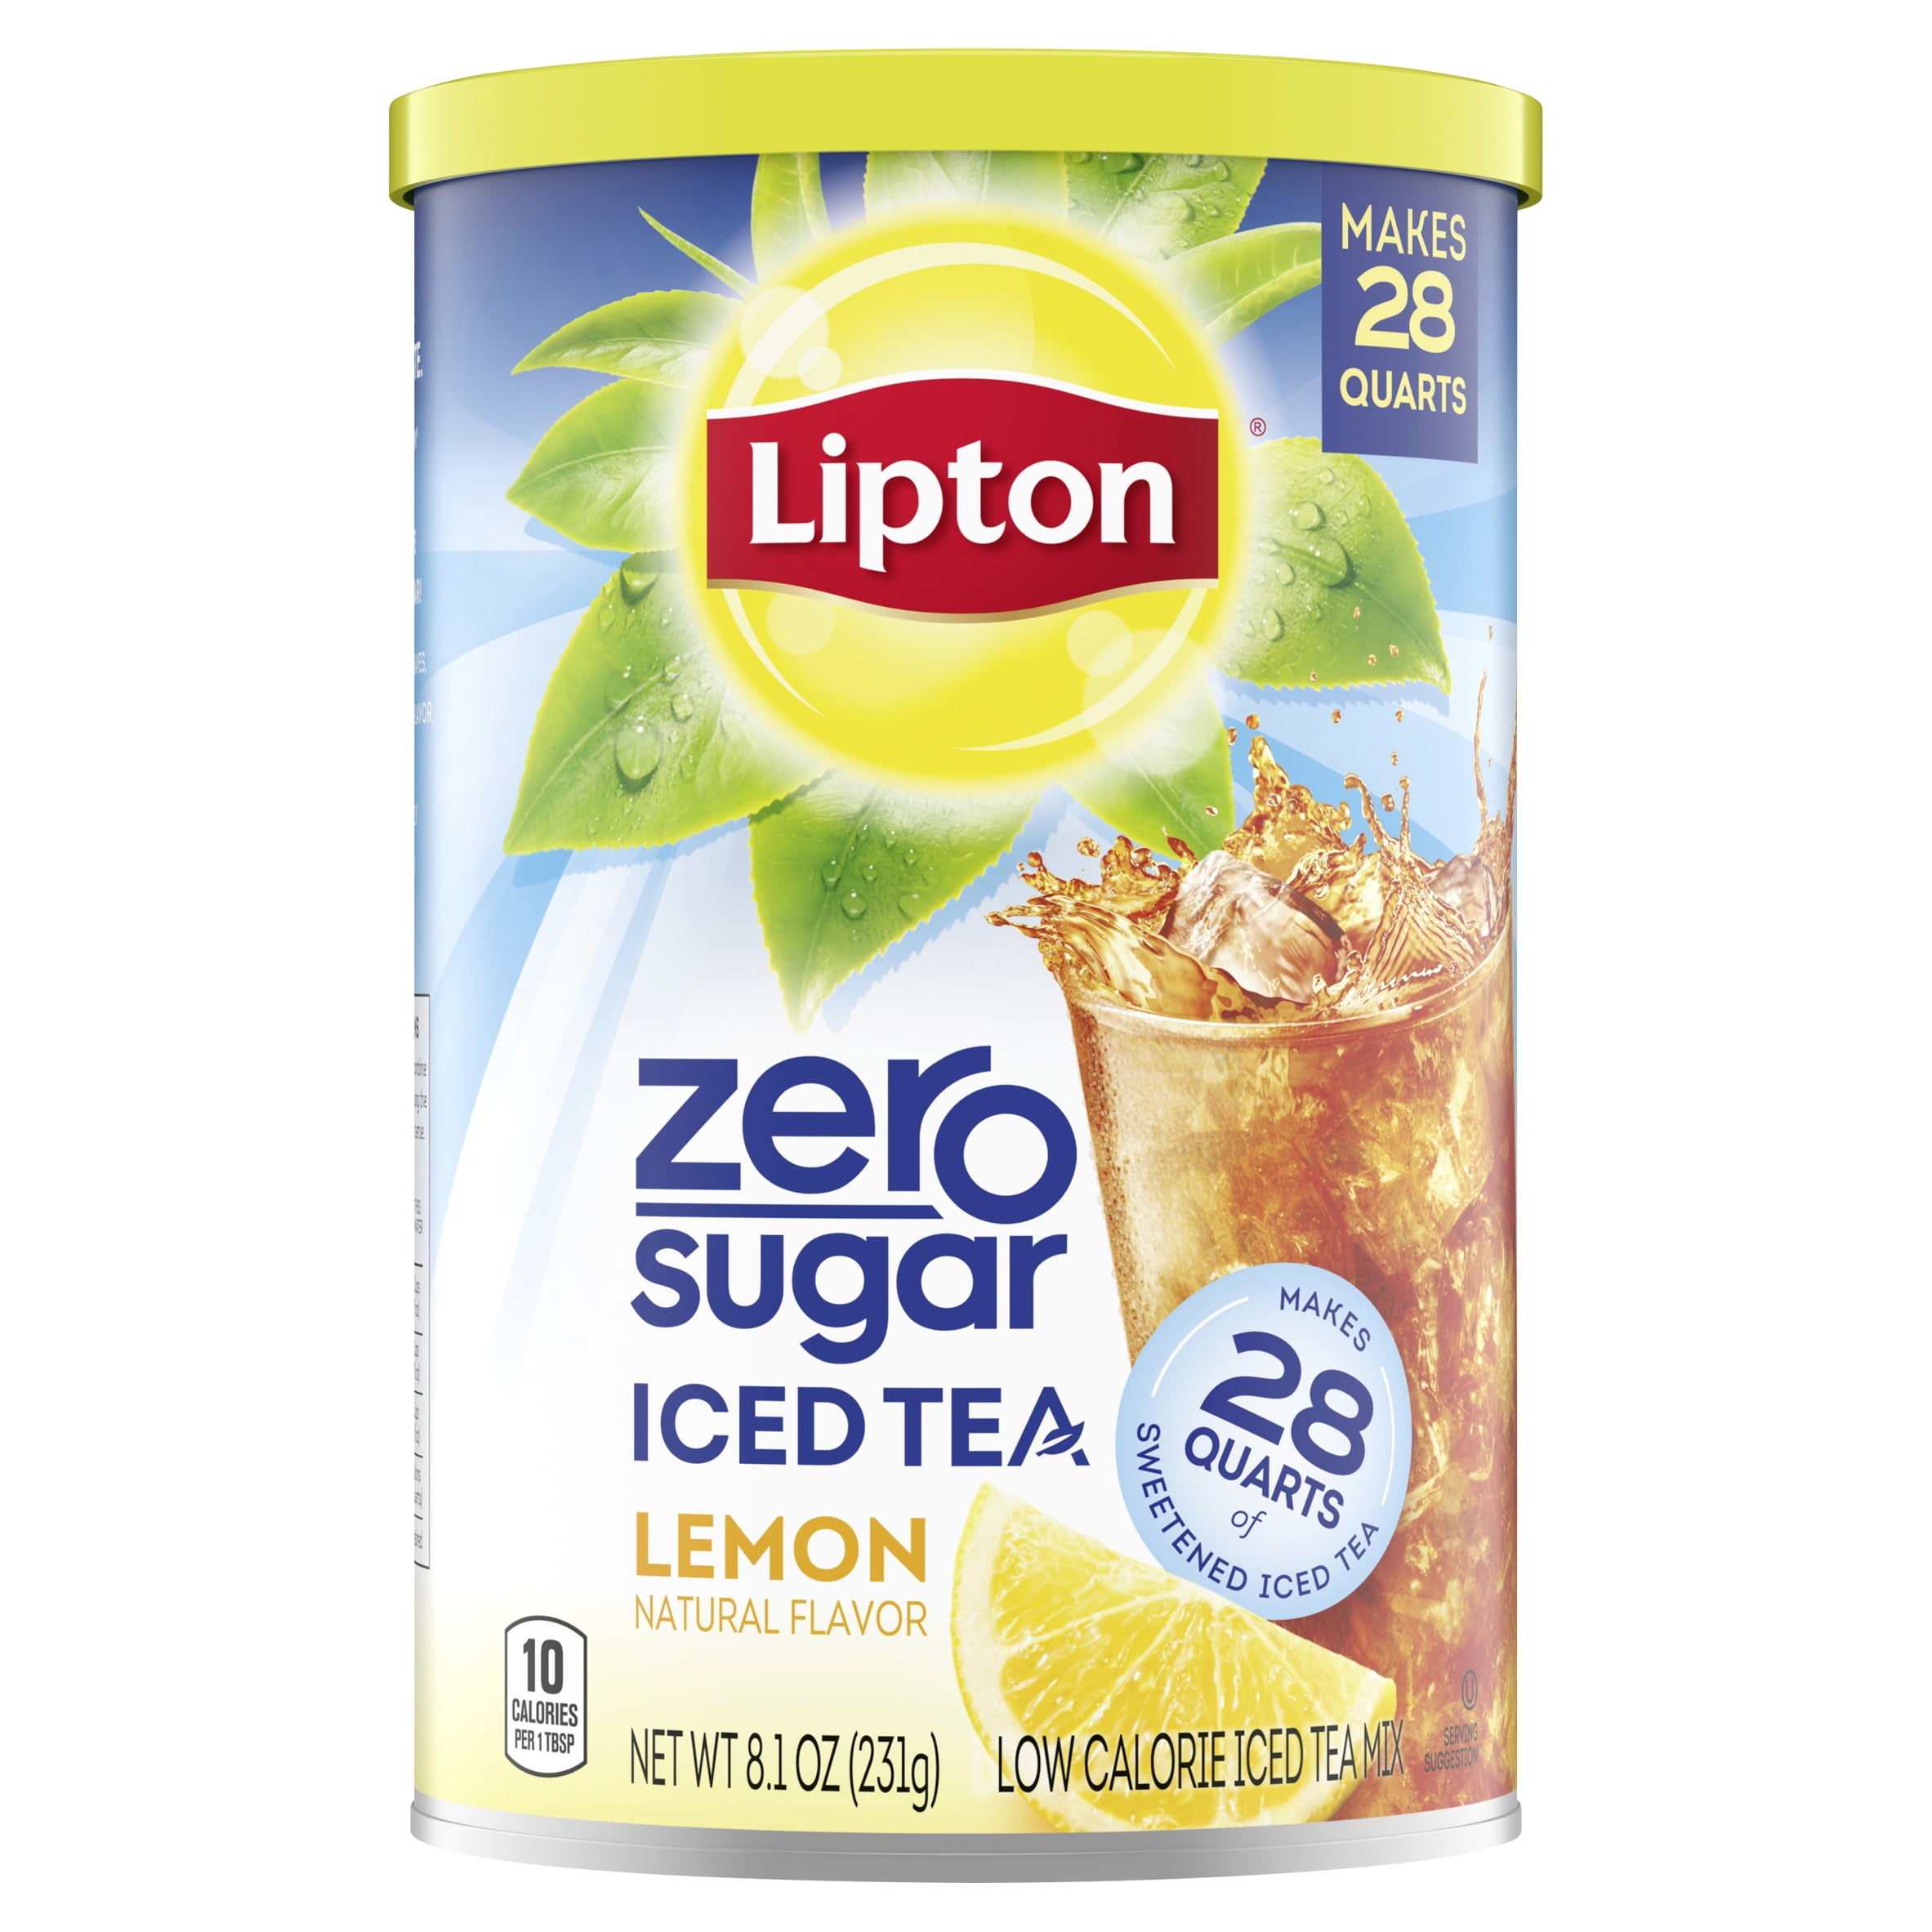 Lipton Zero Sugar Iced Tea Mix Black Tea , Lemon, Caffeinated, 28 Quarts